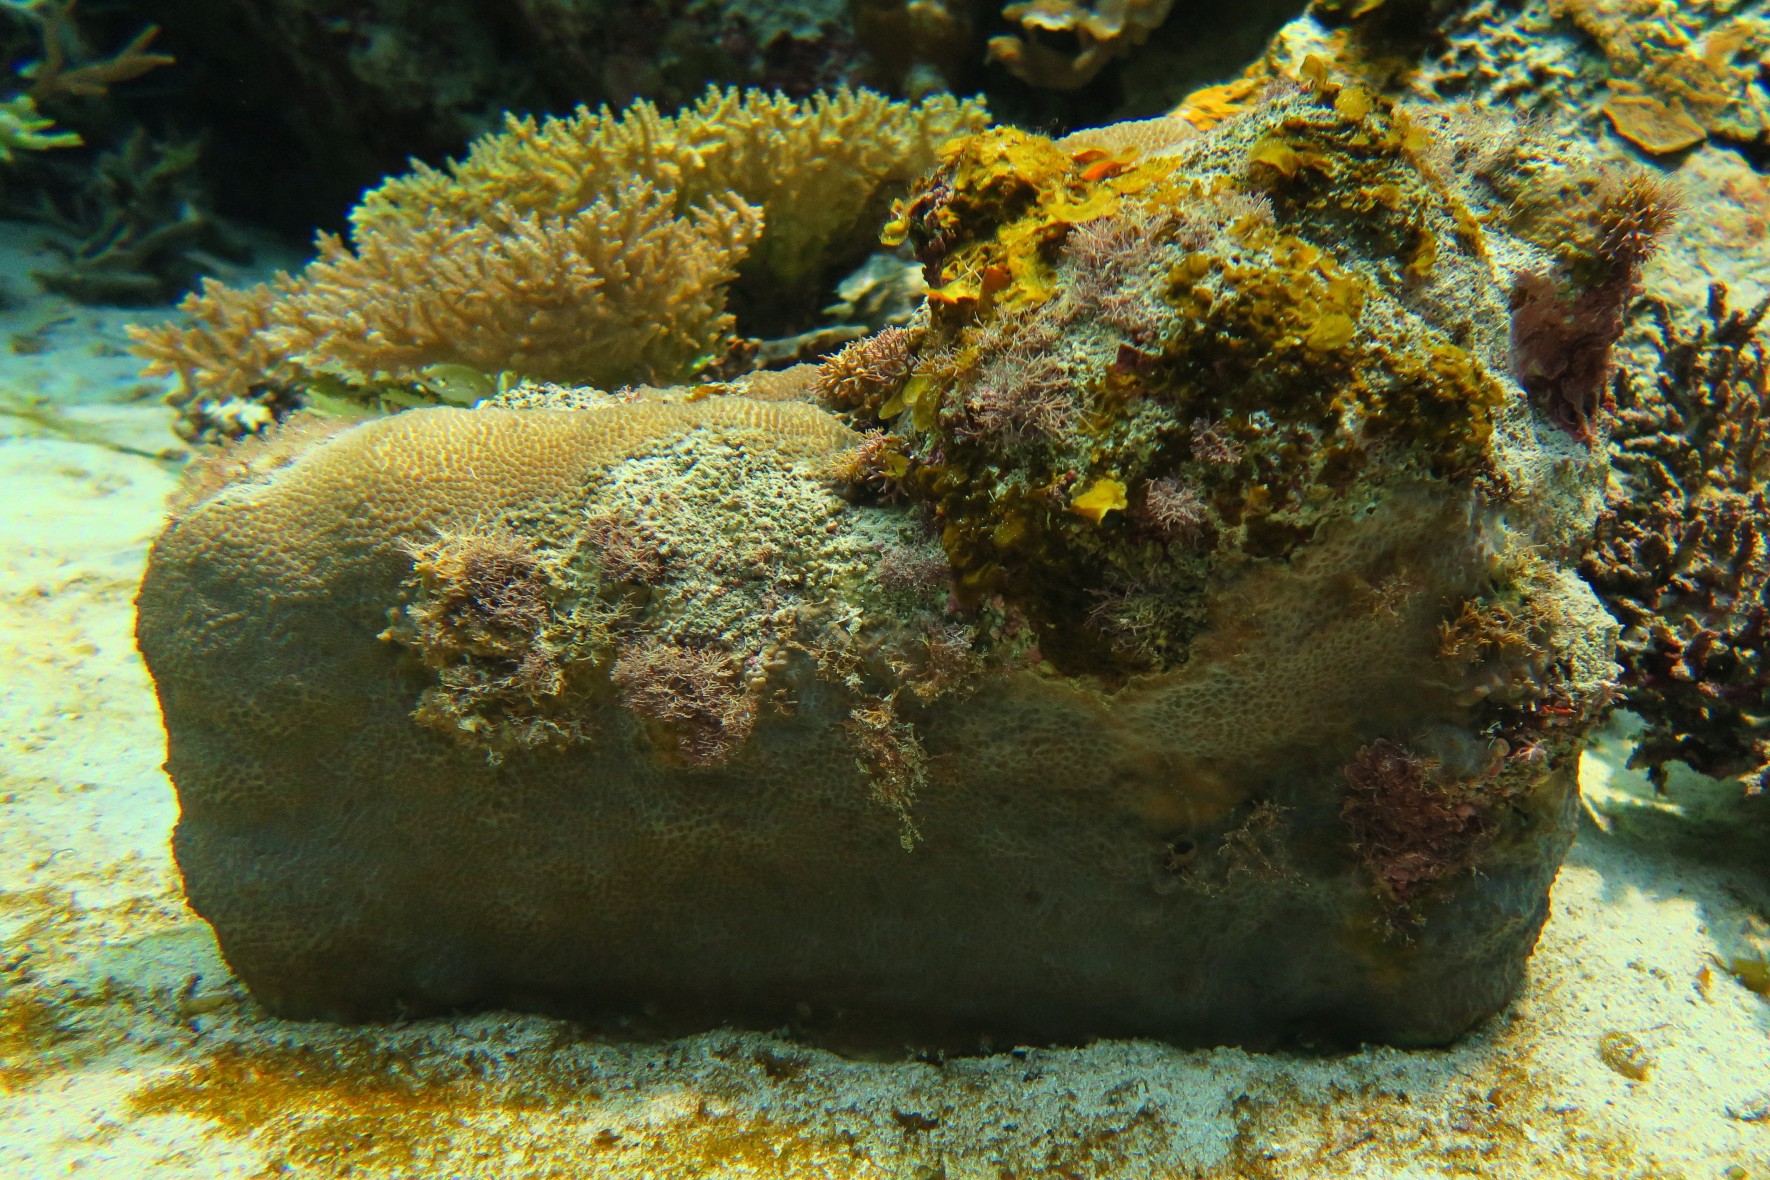 Lesser knob coral